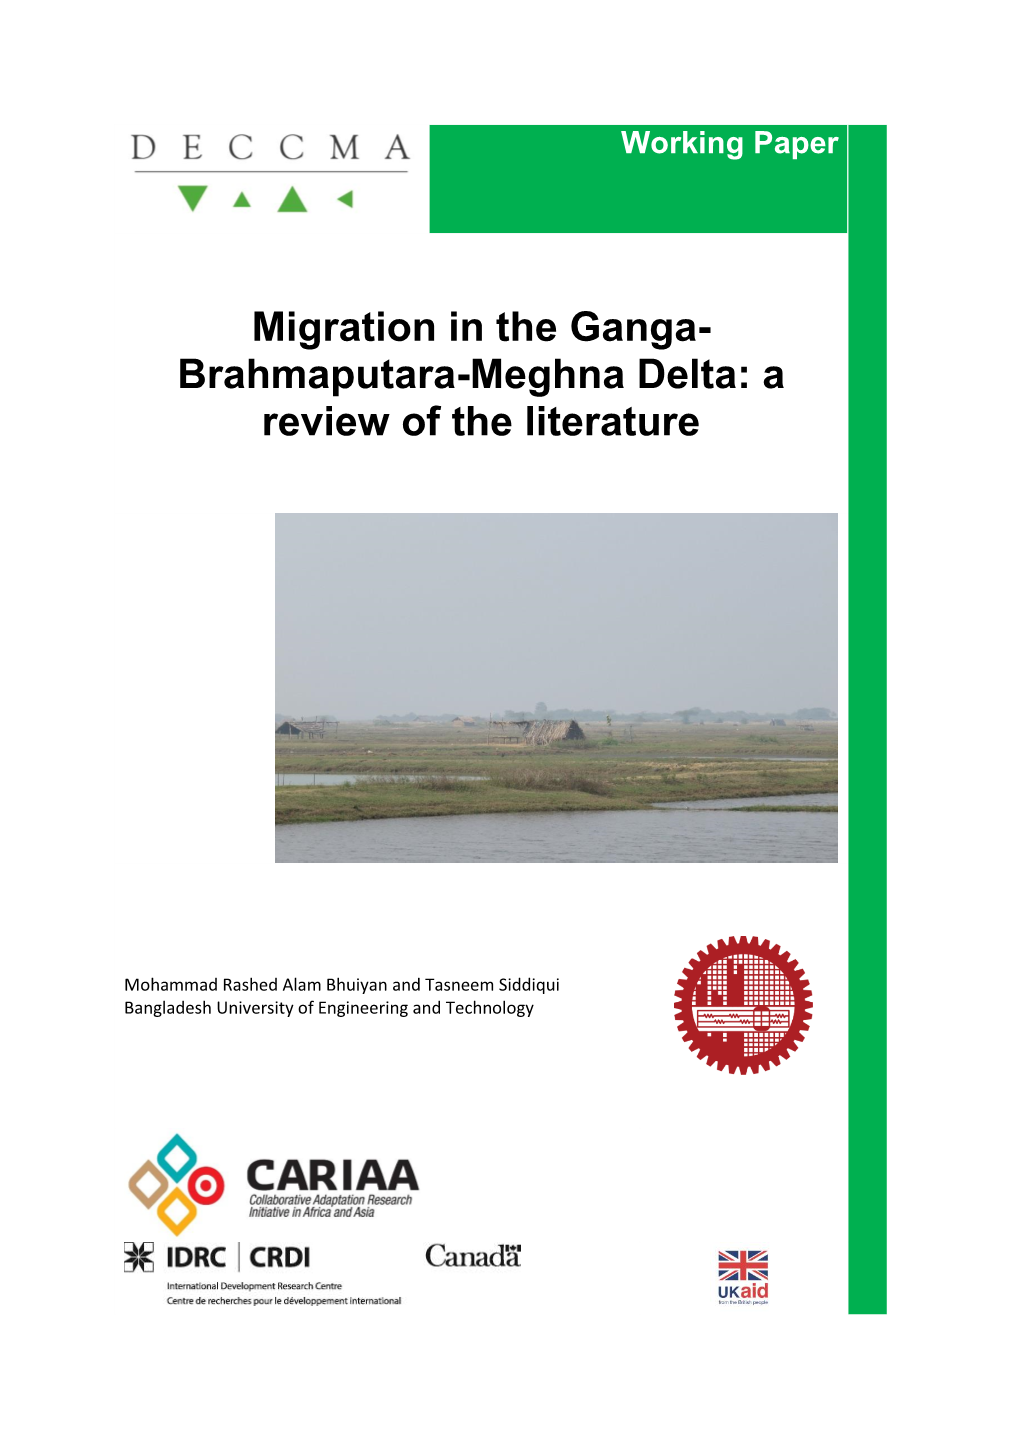 Migration in the Ganga- Brahmaputara-Meghna Delta: A